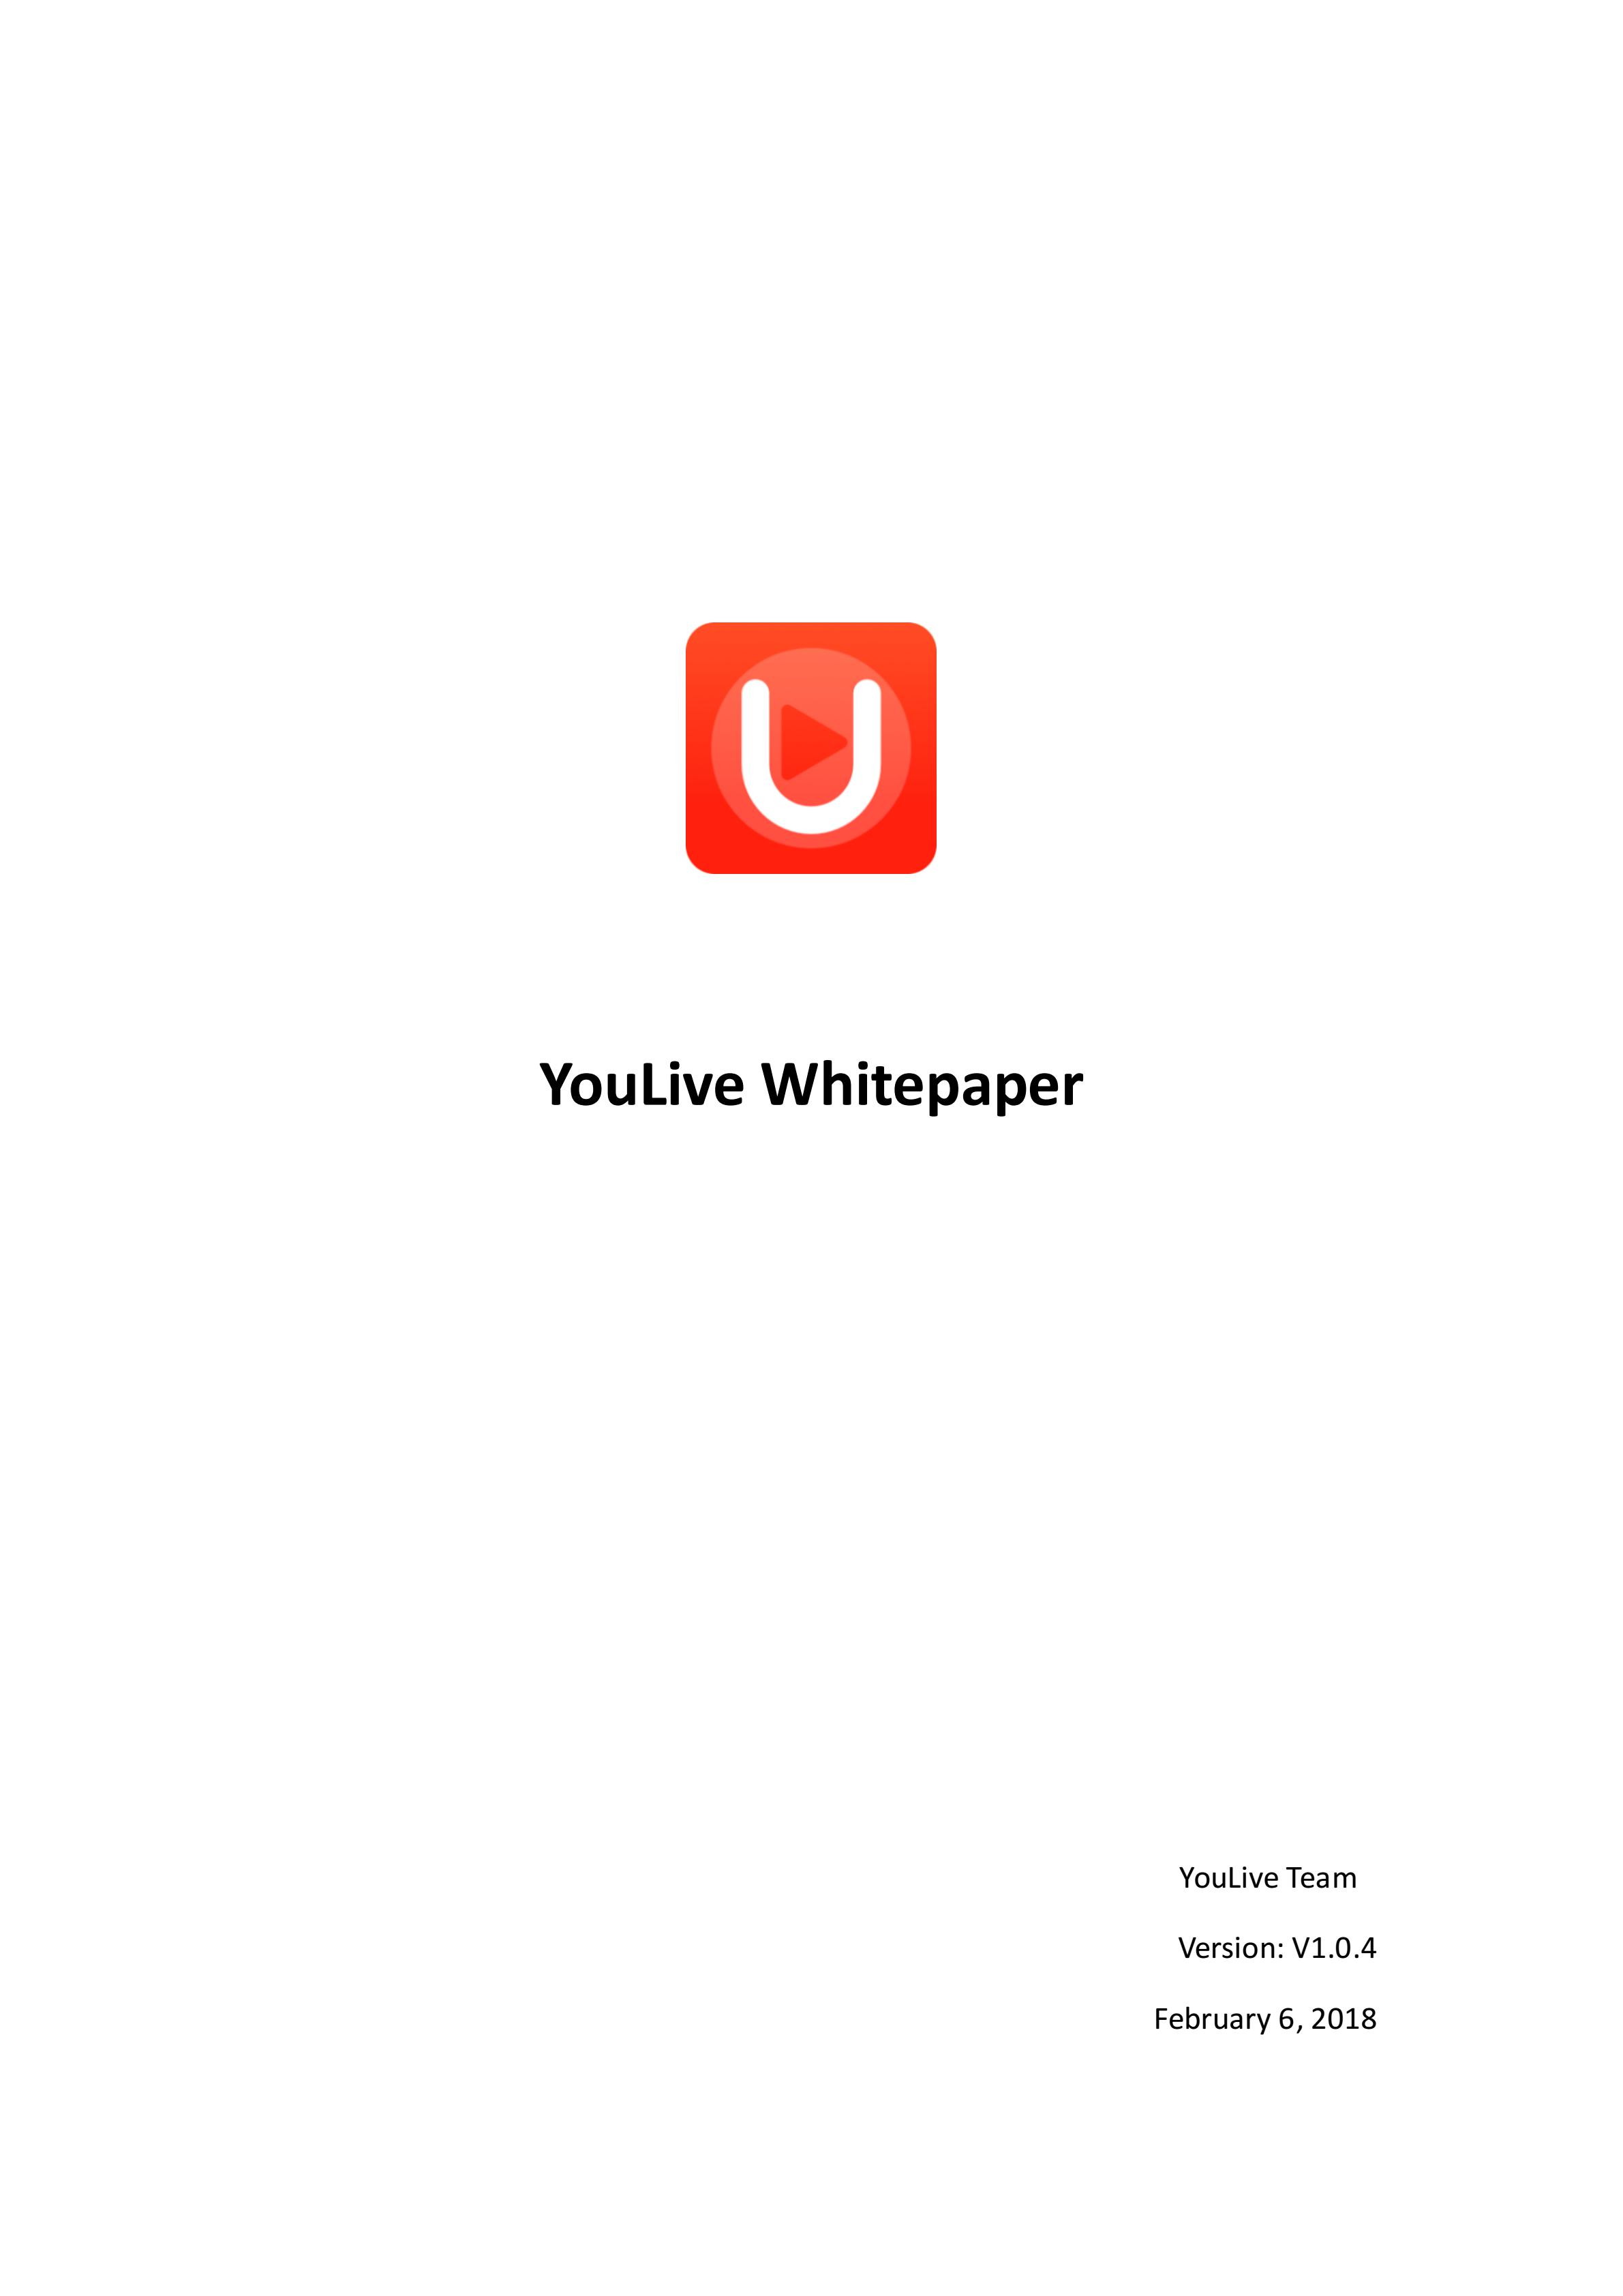 UC_YouLive_WhitepaperV1.0.4_00.jpg